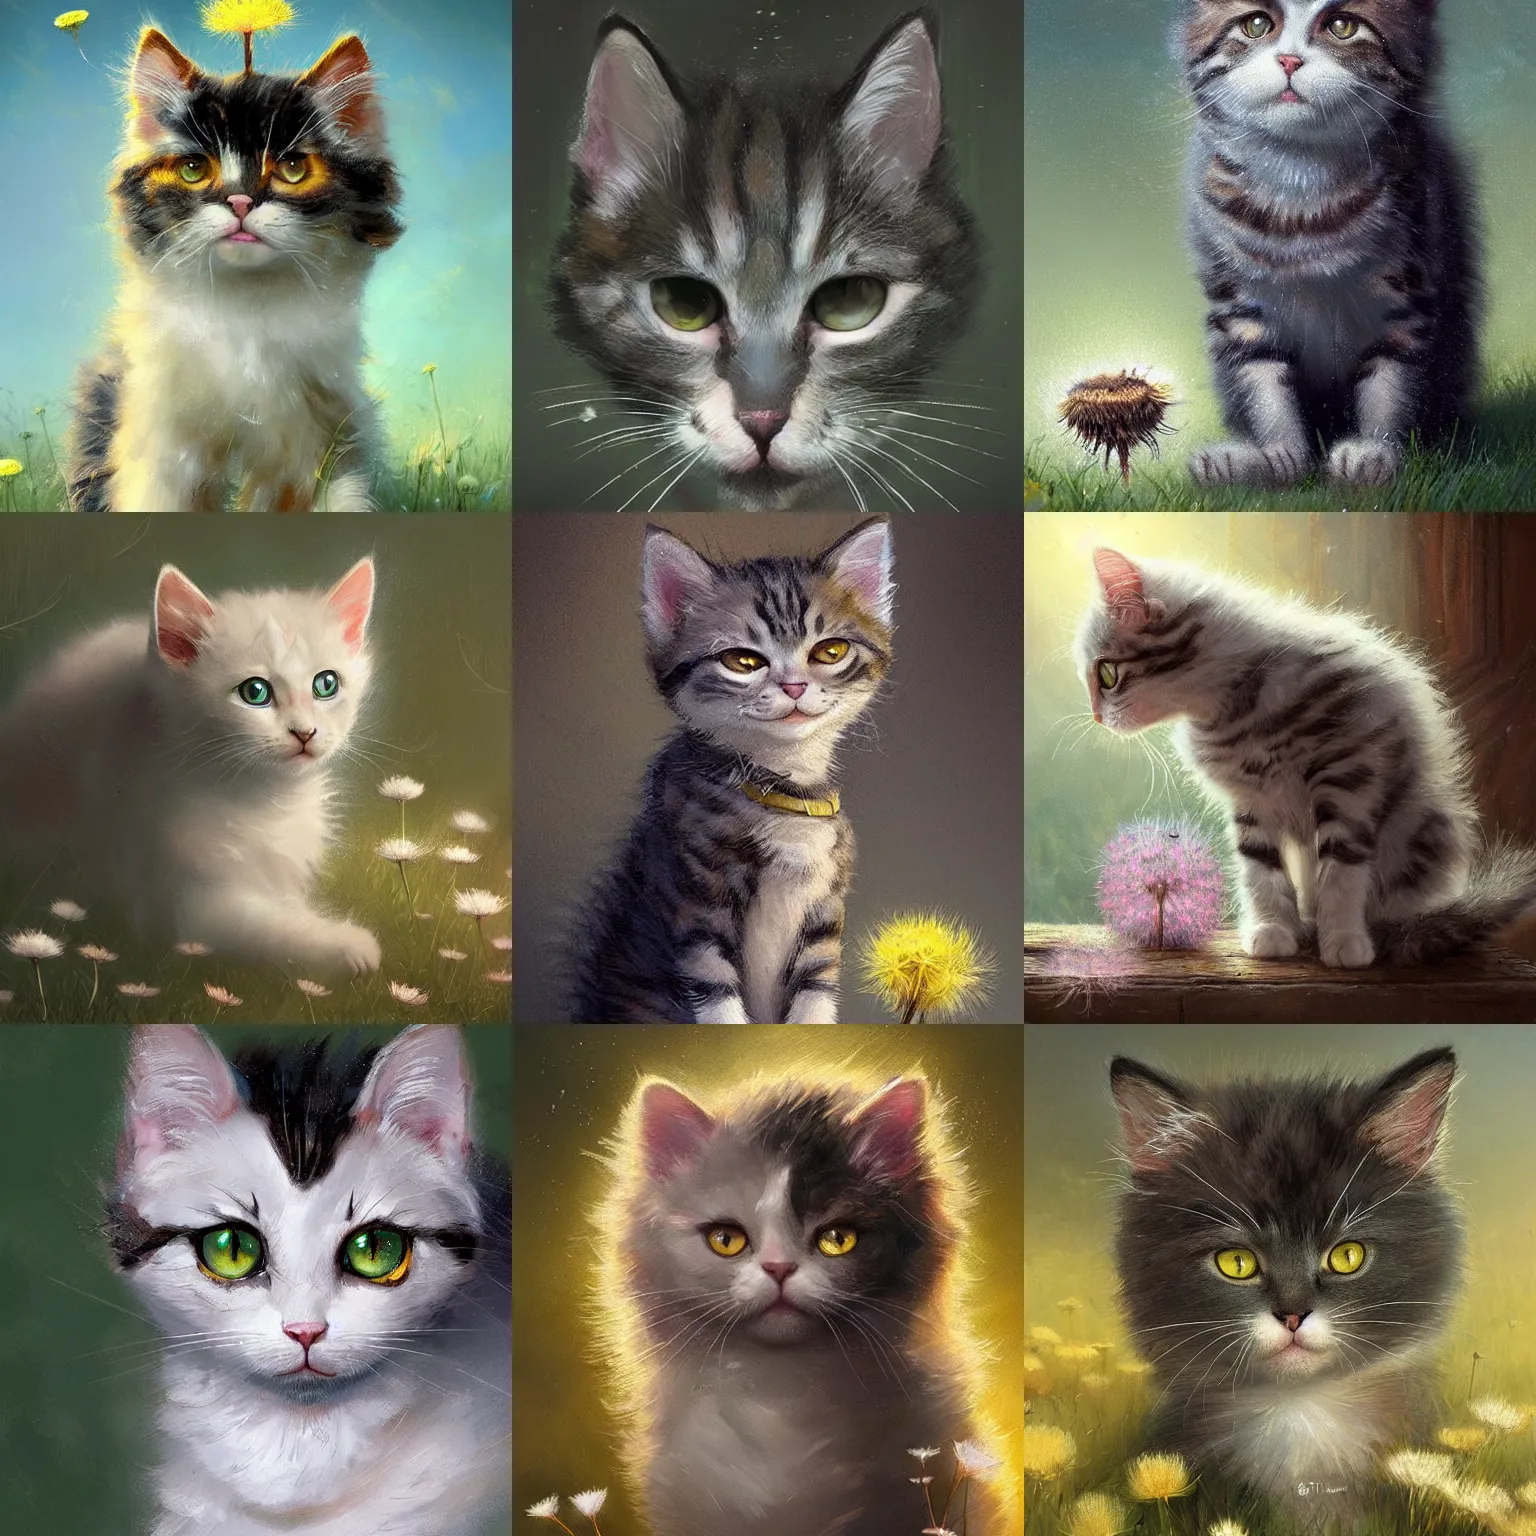 Prompt: the kitty with the big cute eyes and dandelion, detailed digital art by greg rutkowski, thomas kinkade and keith parkinson, artstation, cgsociety, 8 k, hd